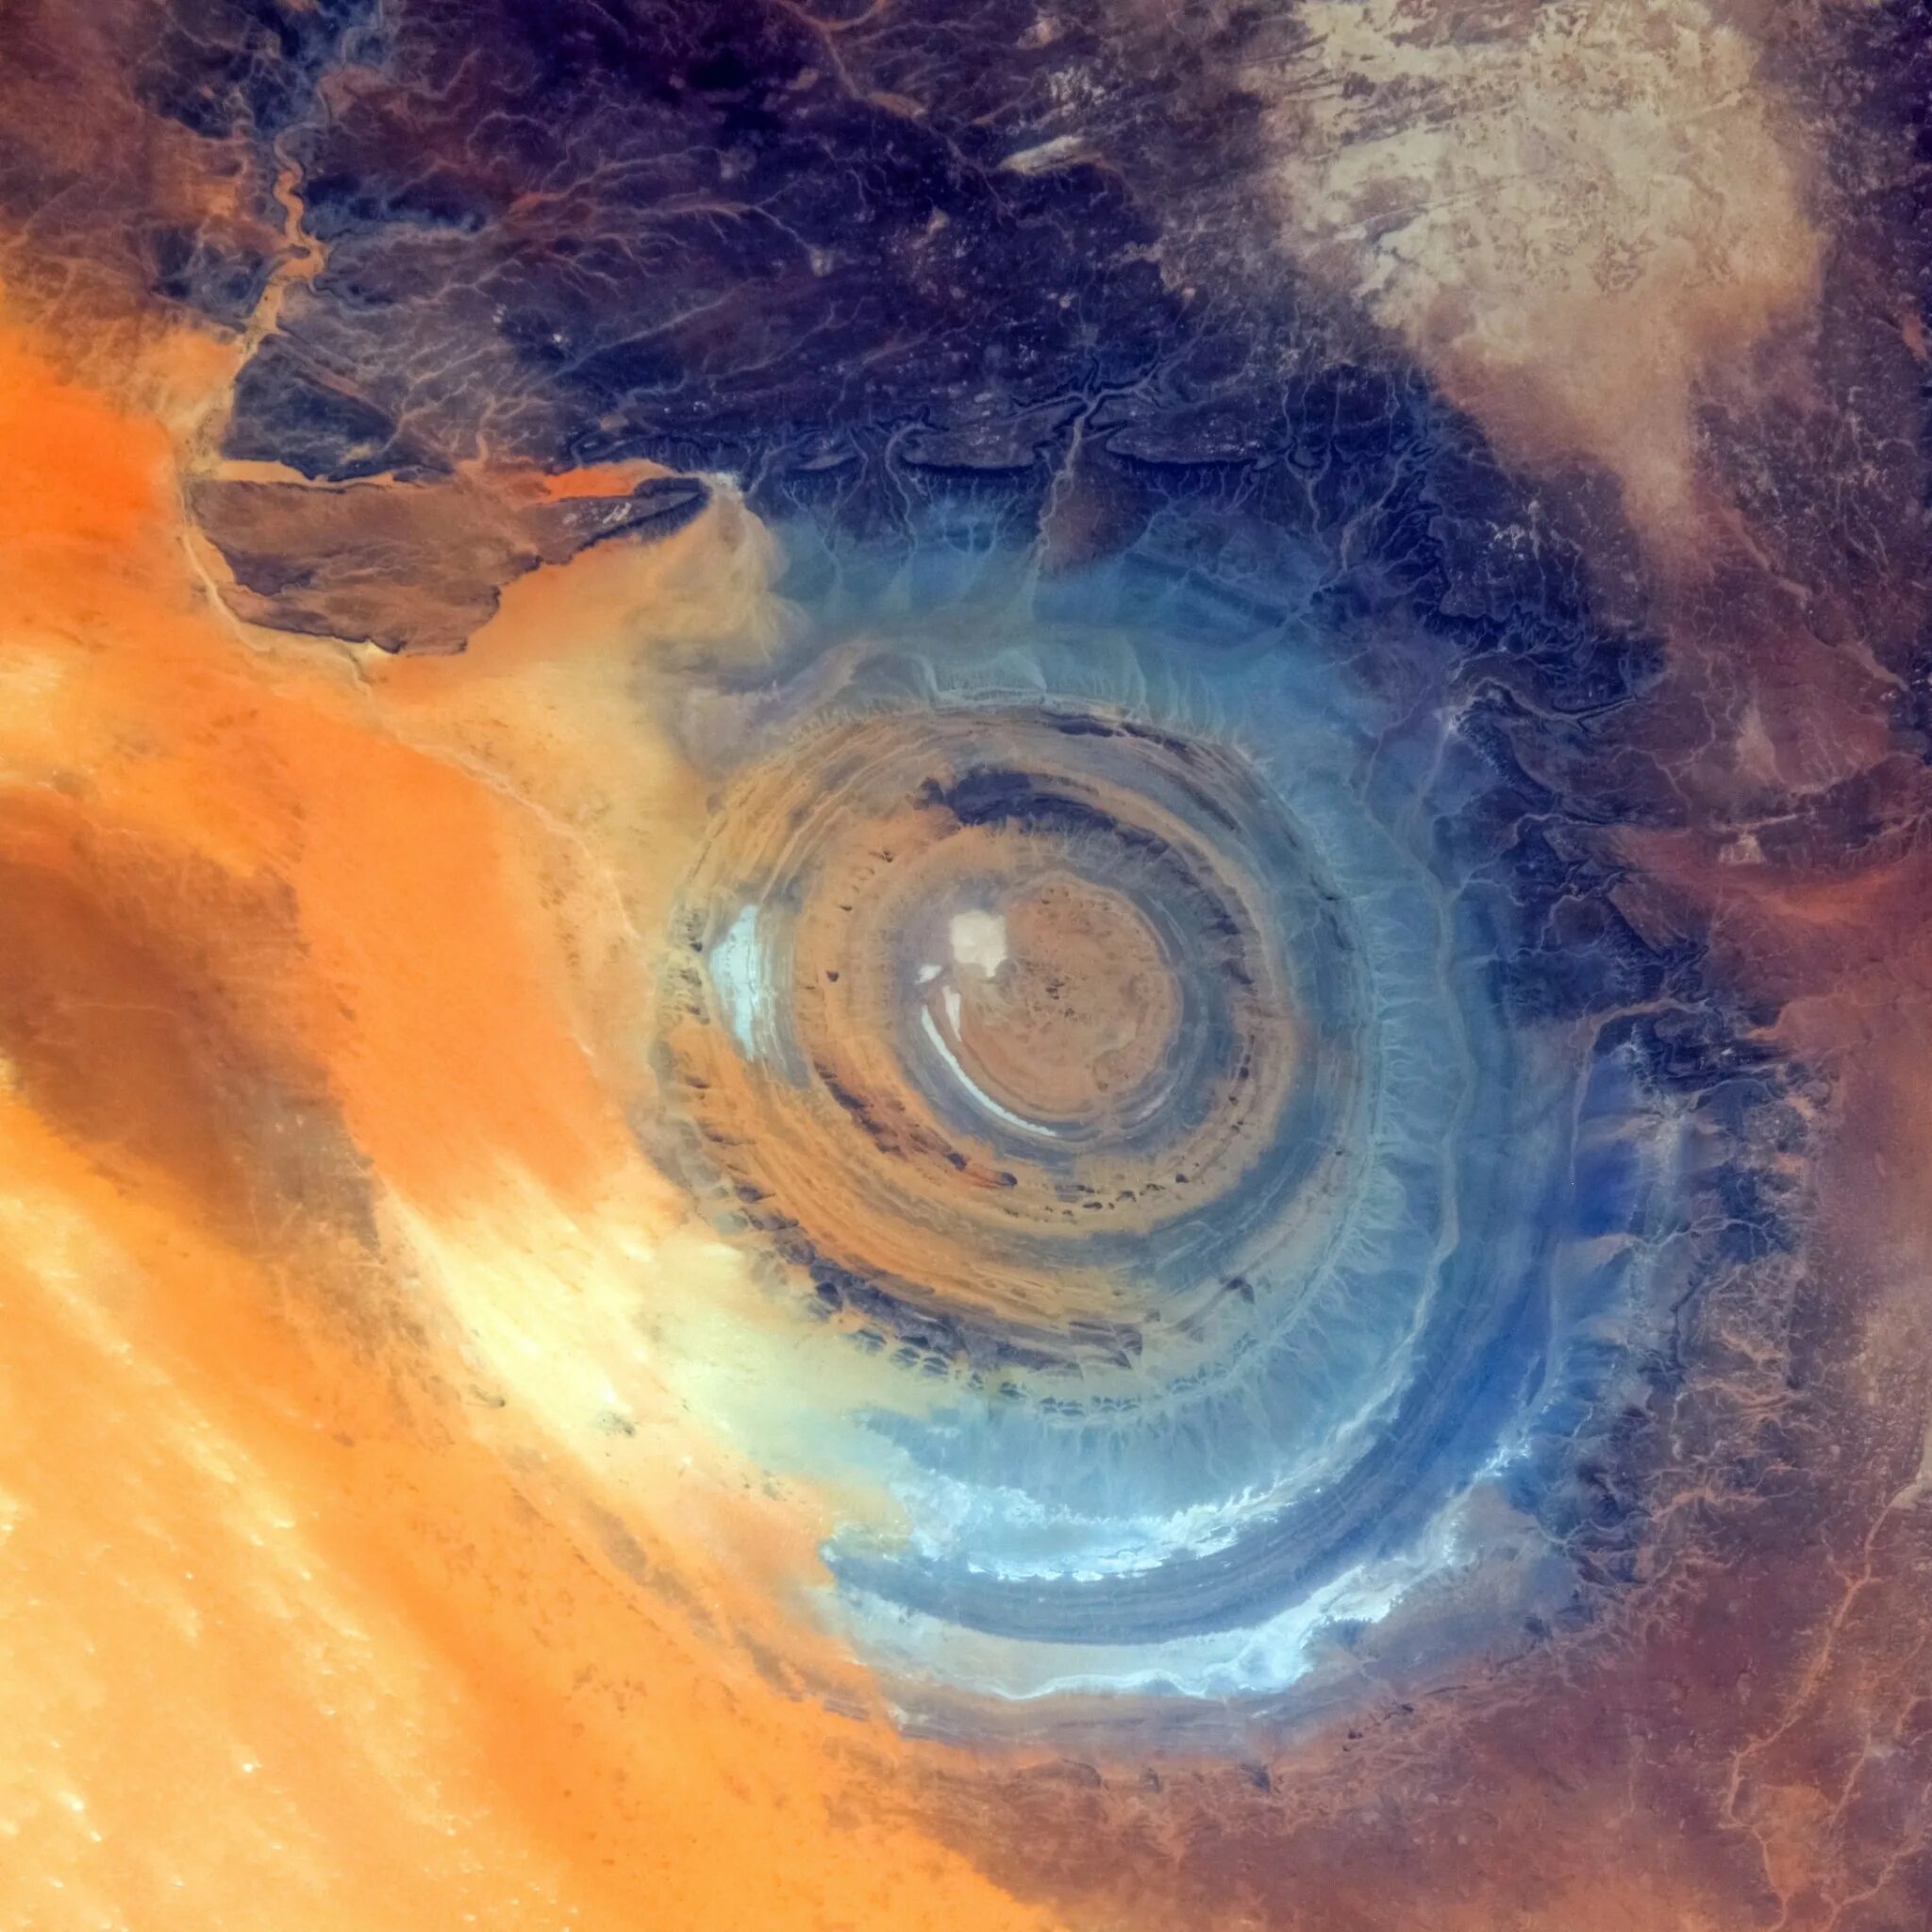 Сахара на глазок. Мавритания ришат - глаз Сахары Мавритания. Глаз Сахары или Гуэль-Эр-ришат Африка. Структура ришат глаз Сахары. Ришат Мавритания из космоса.